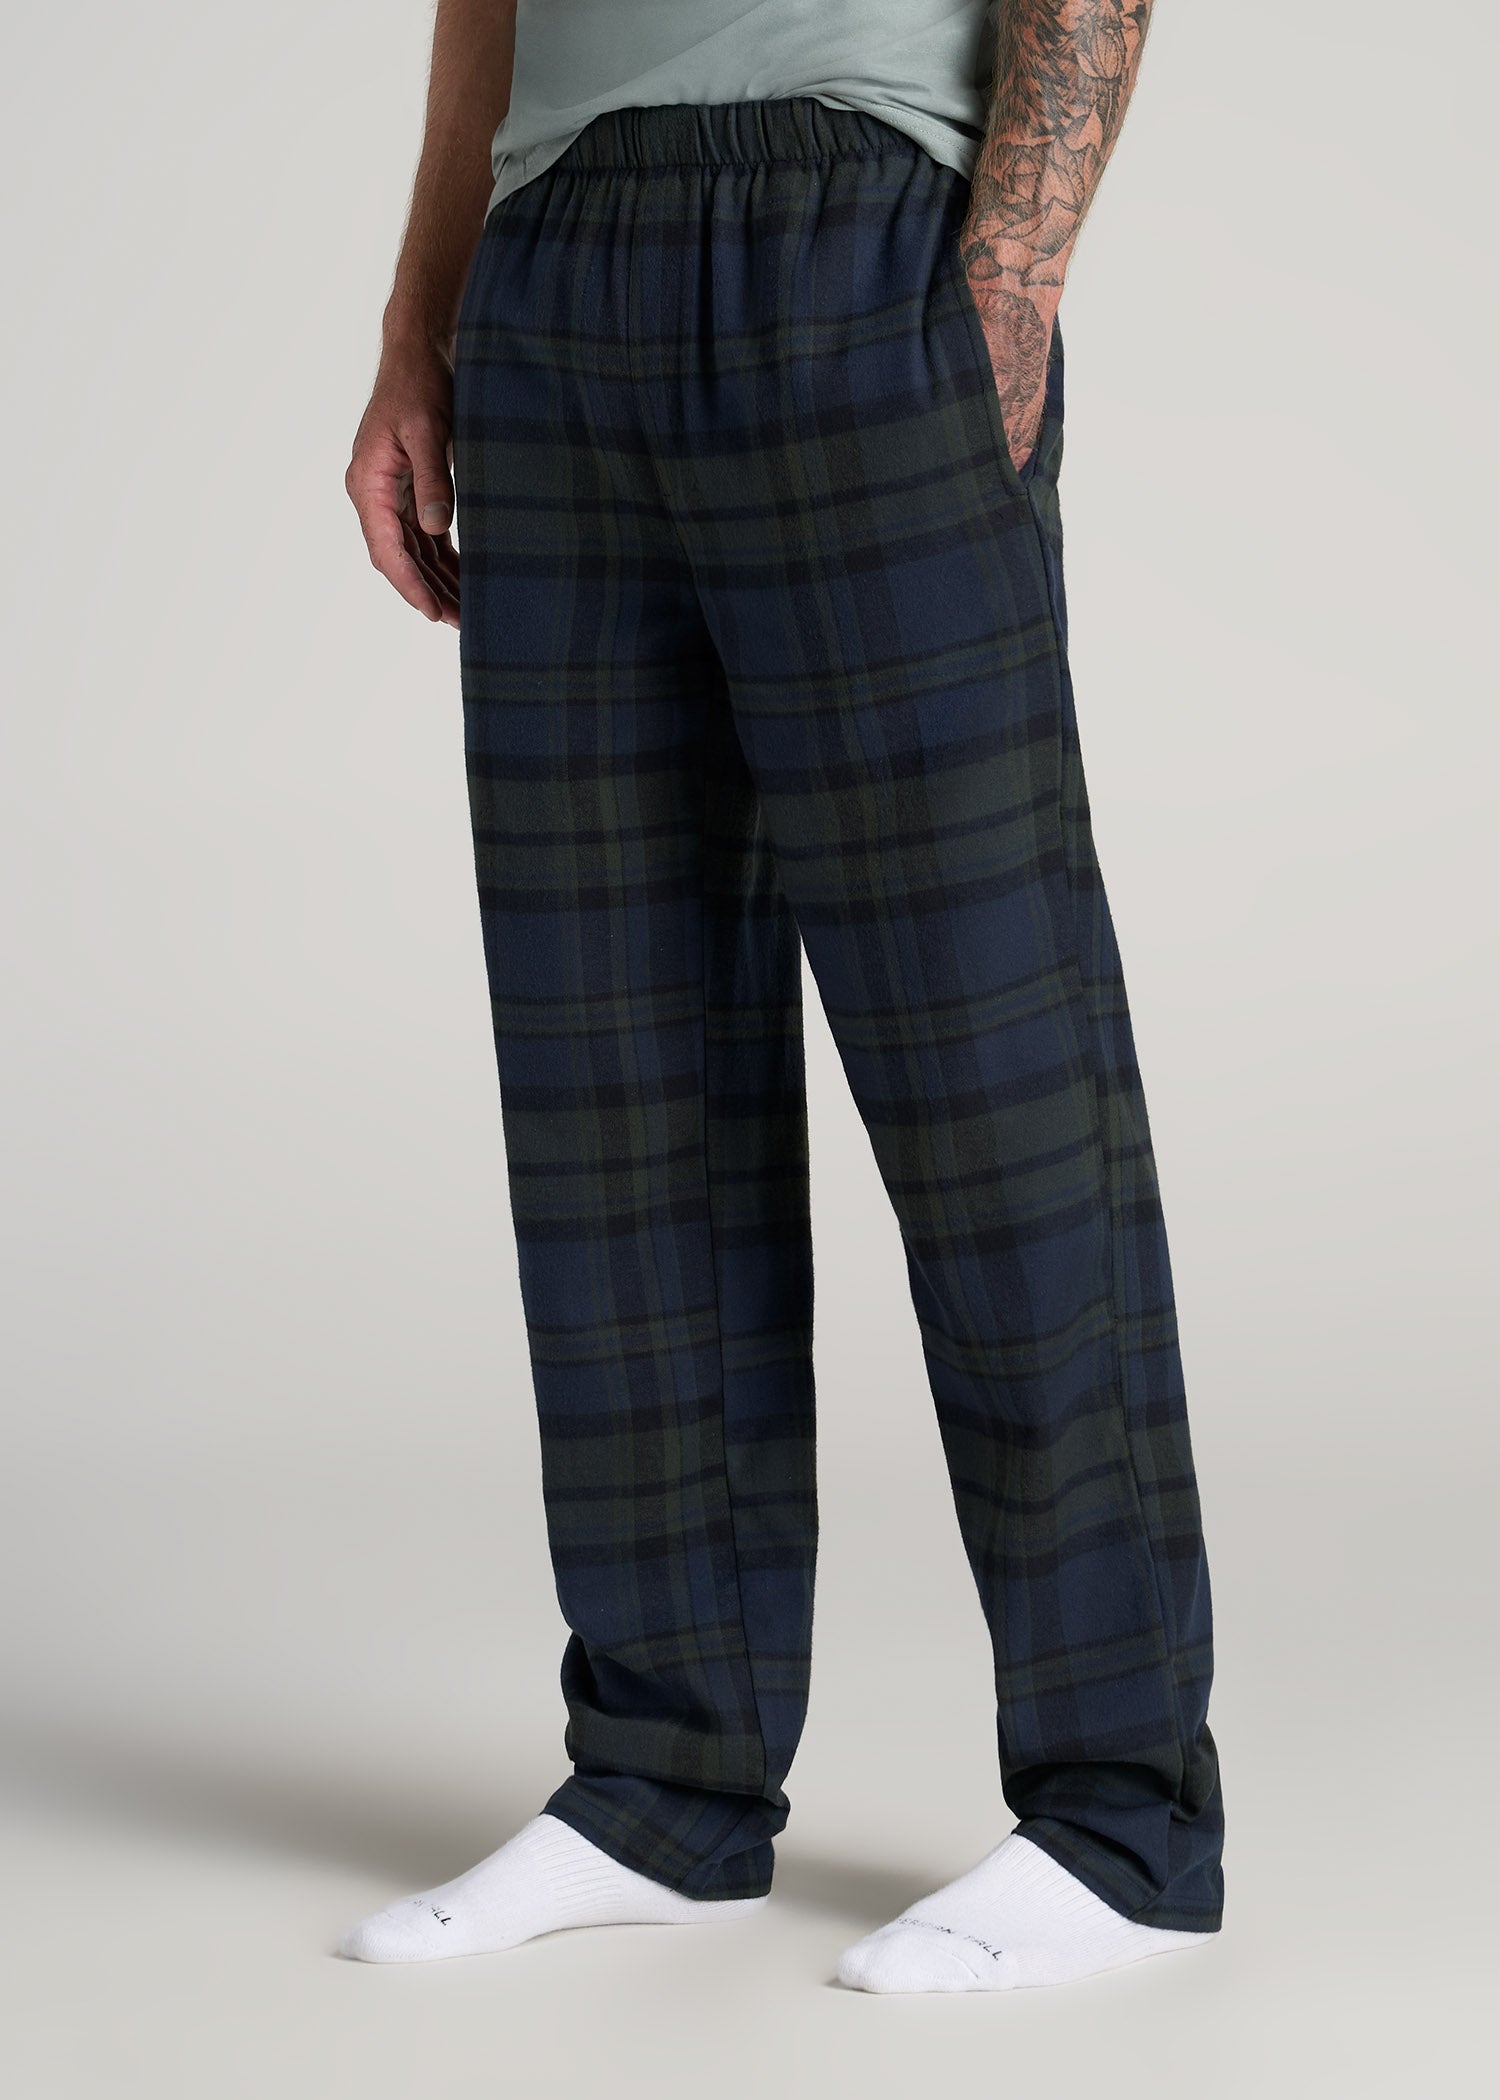 Men's Check Pyjamas Long Sleeve Trouser Set, Size: M-XXL, Black